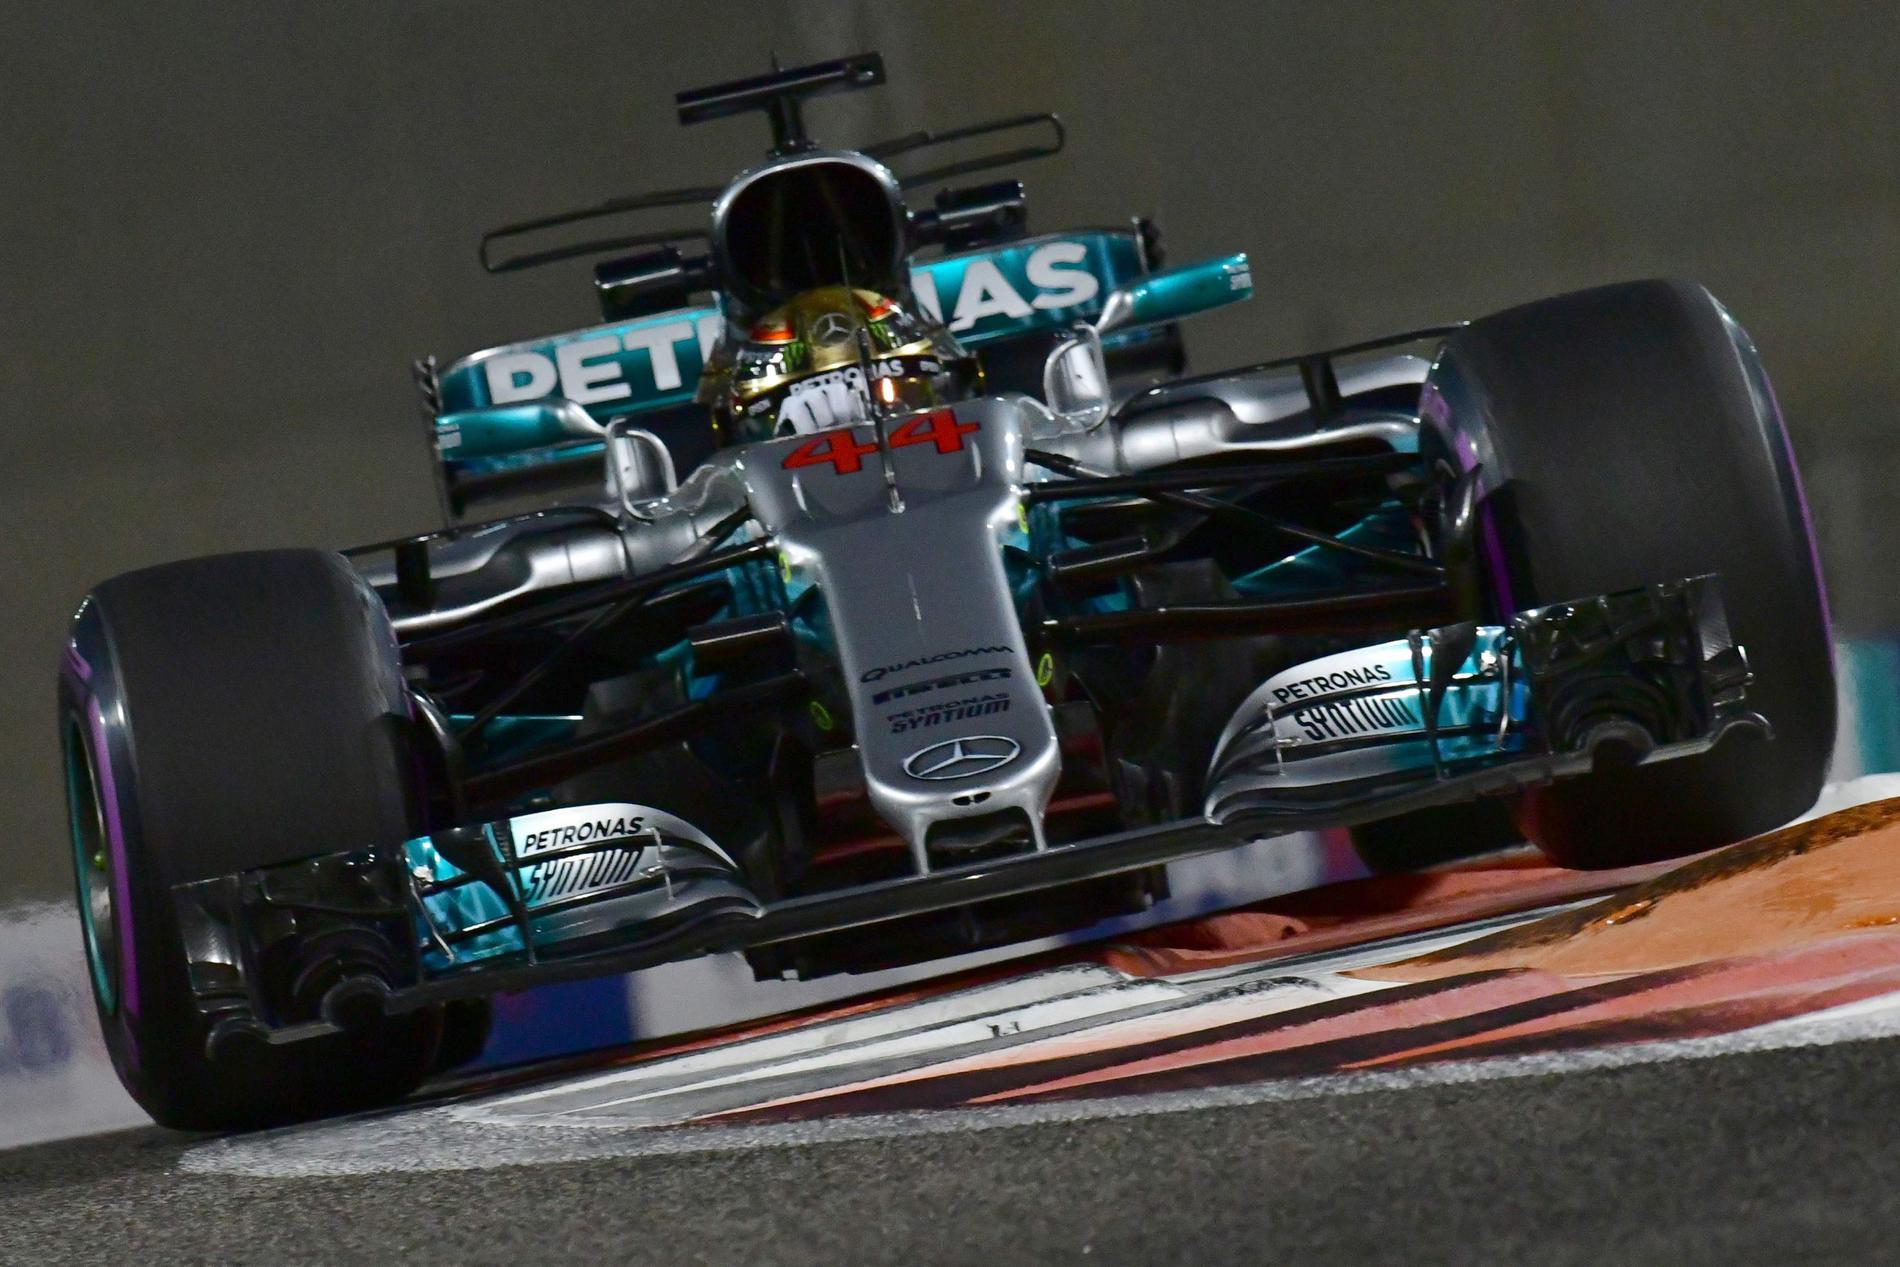 Formel 1: Lewis Hamilton slog varvrekord inför Abu Dhabi GP